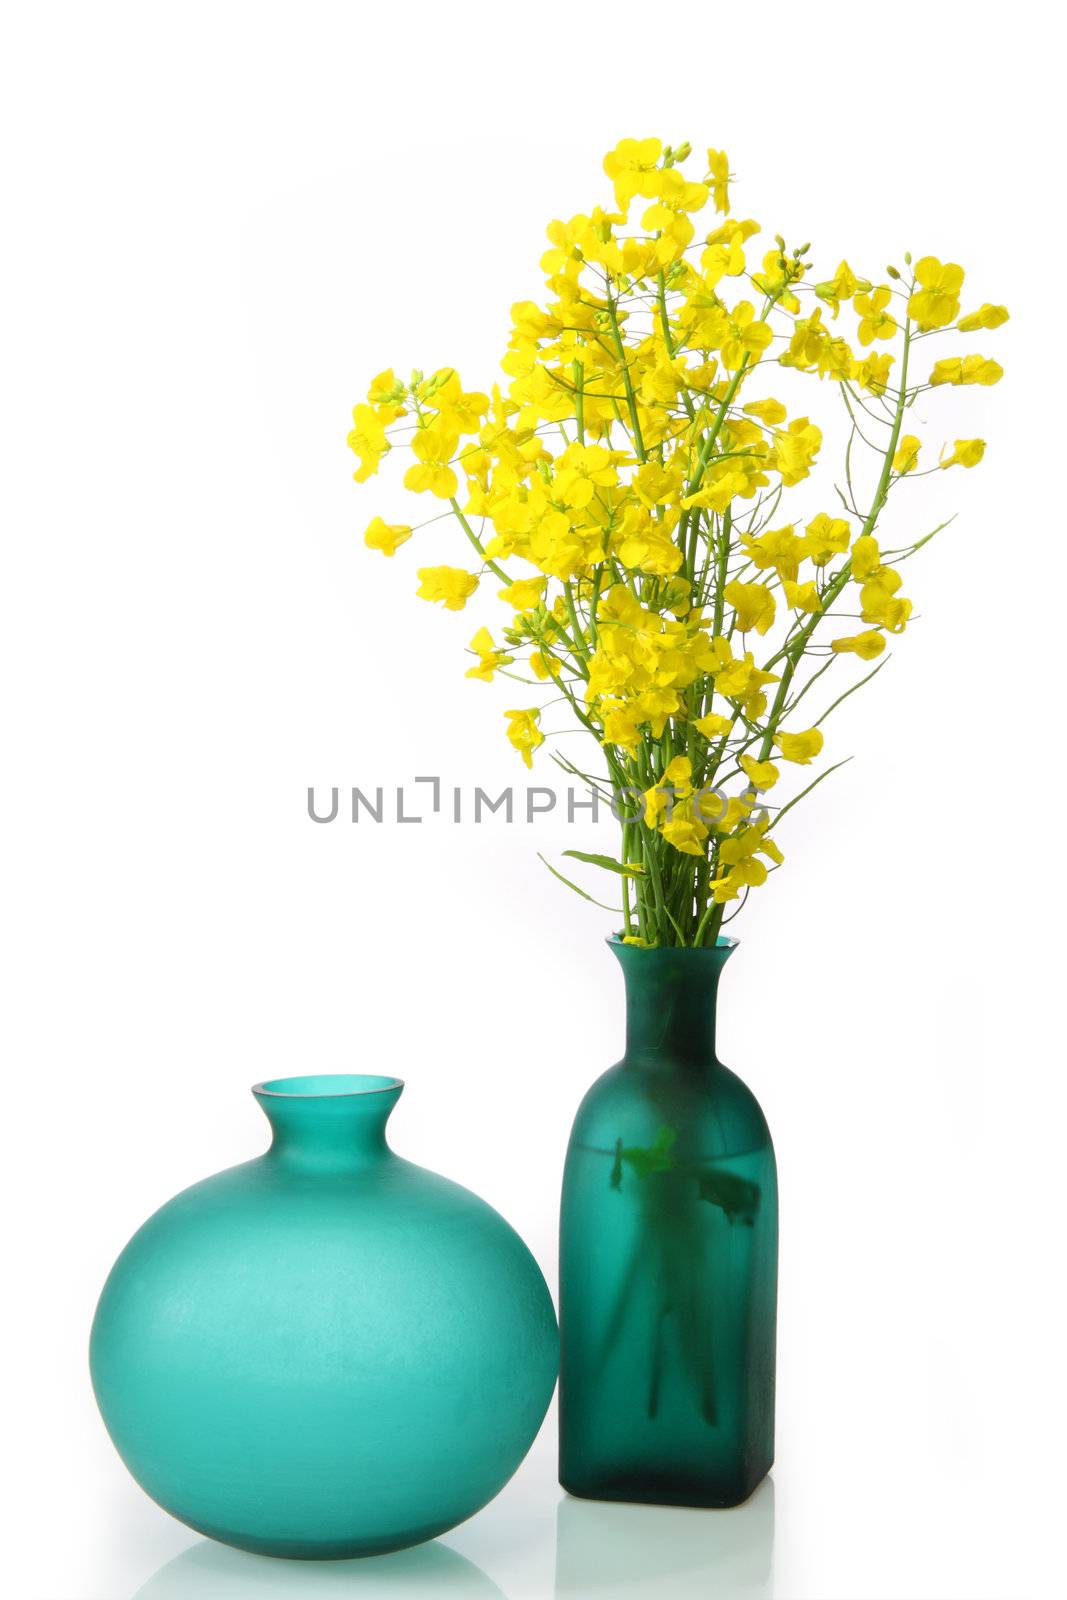 Green vases by Teamarbeit